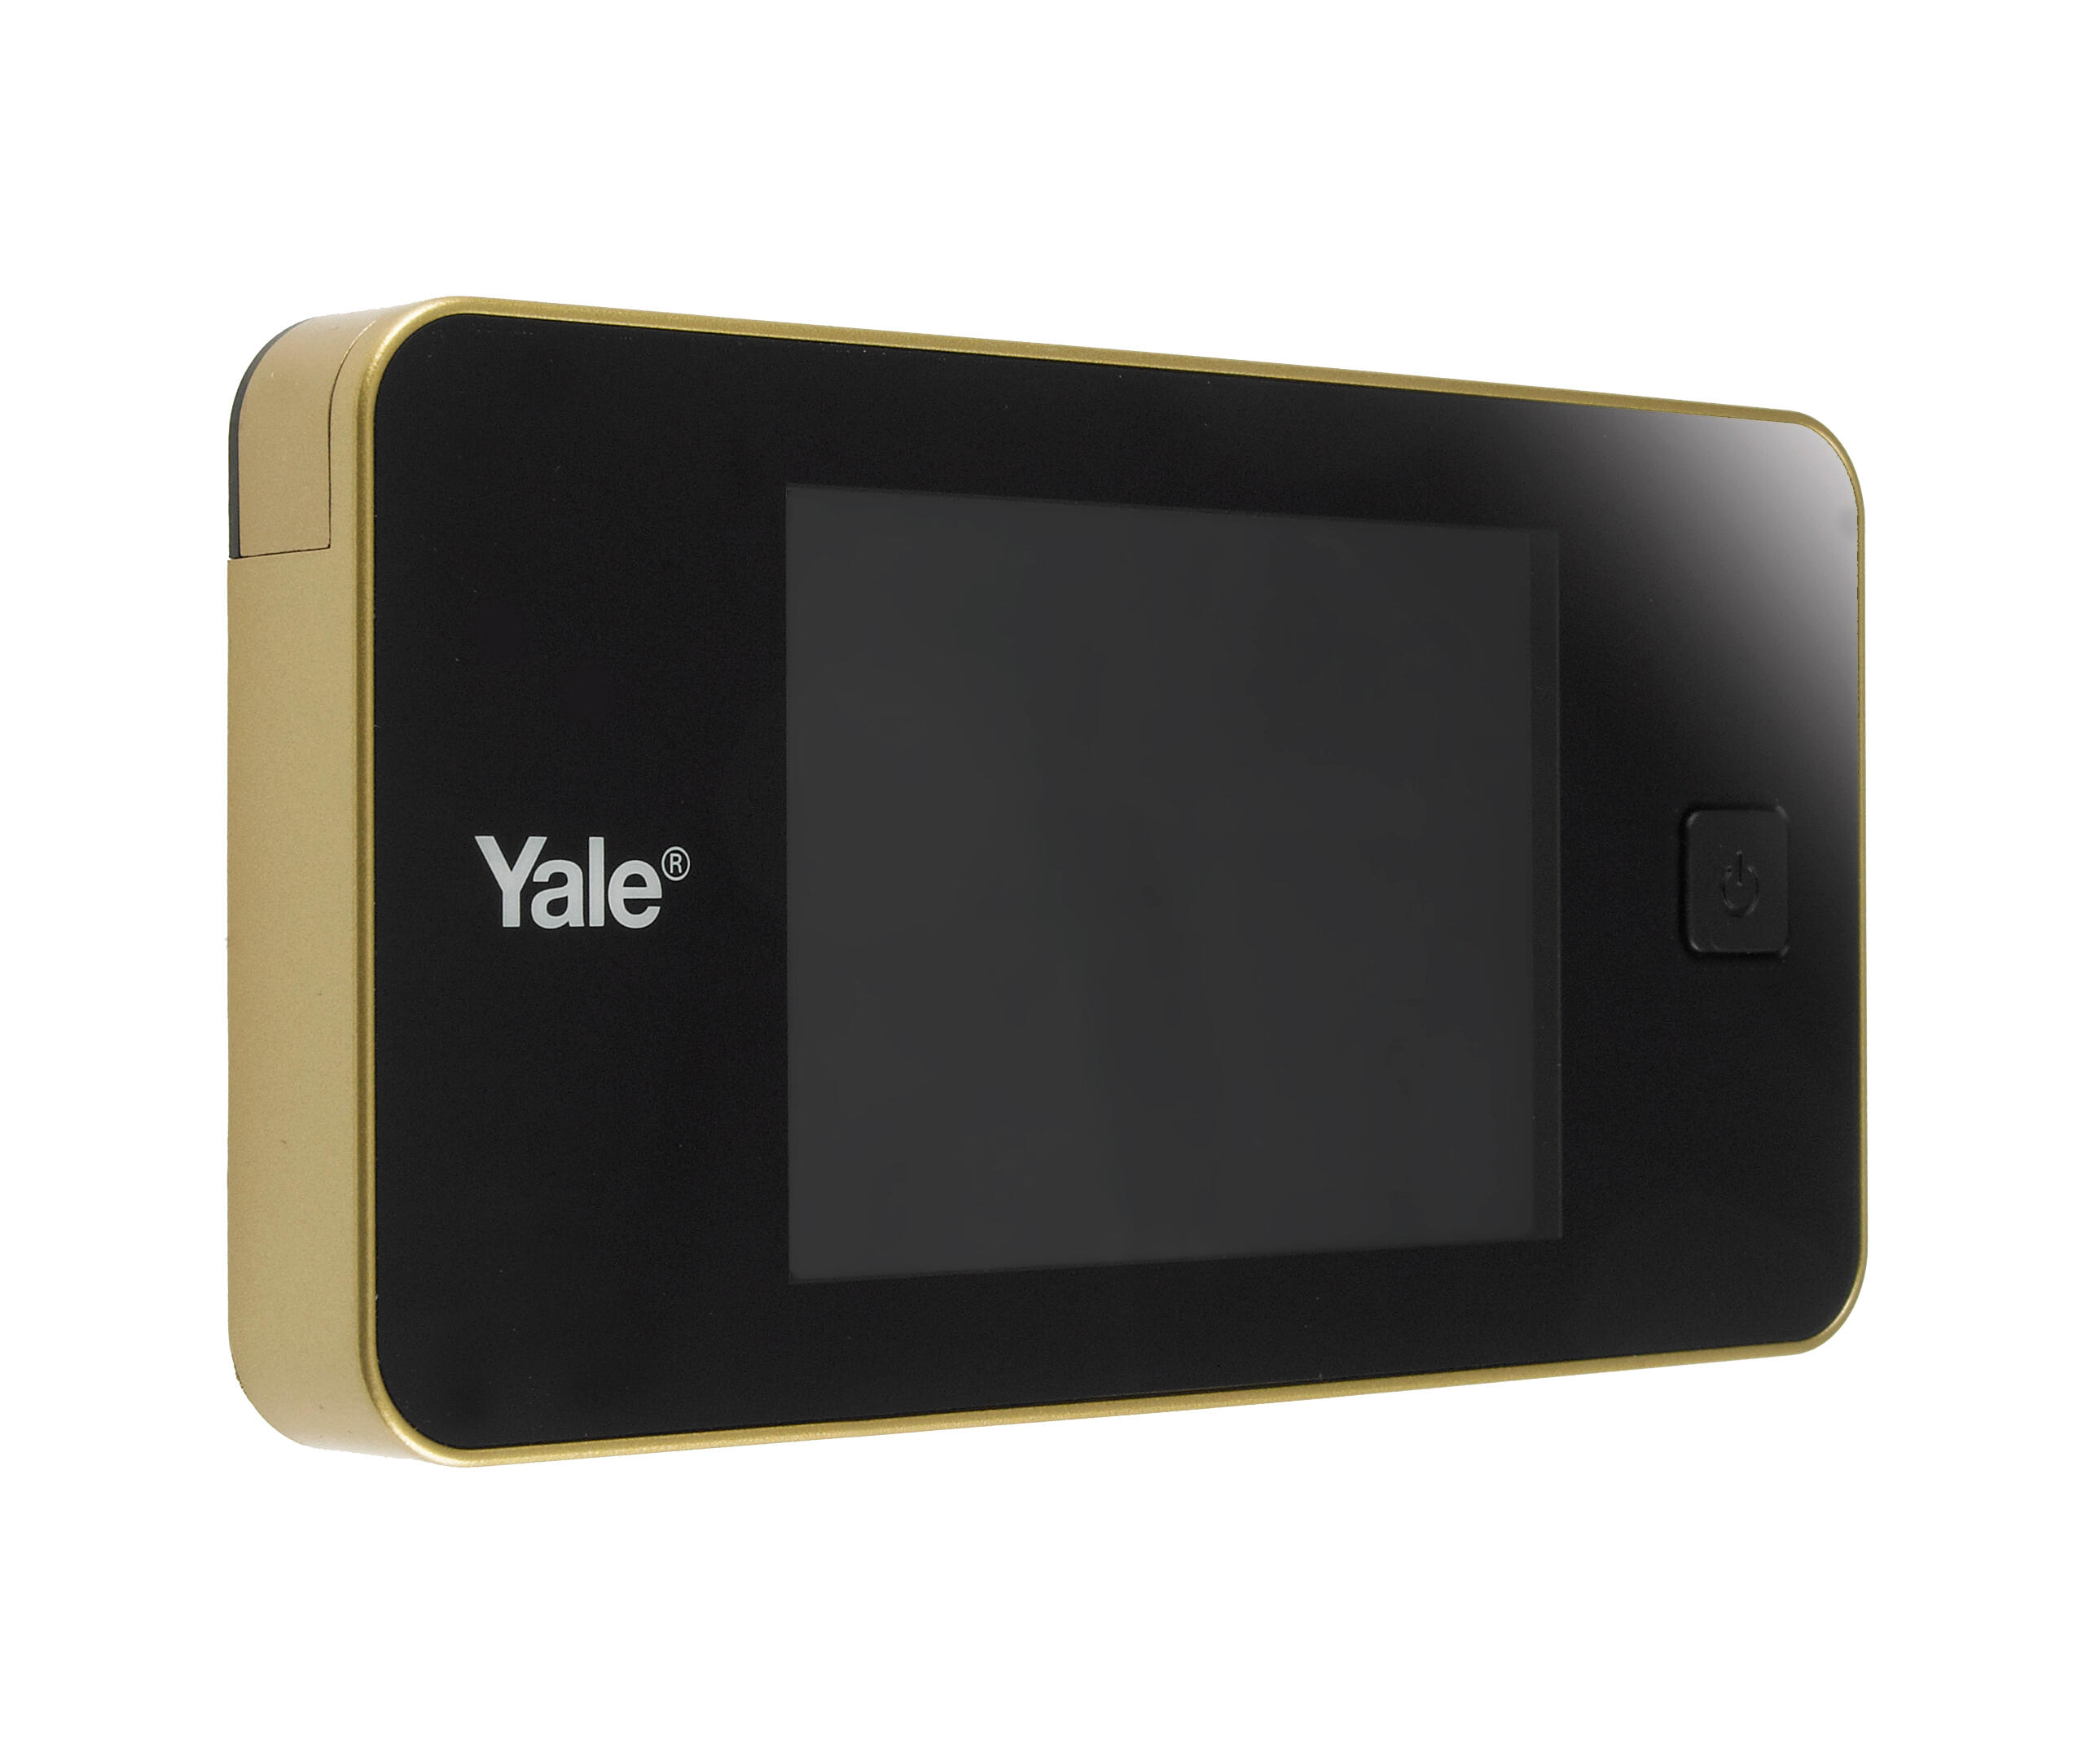 Mirilla digital yale mod 4316 con pantalla lcd 3,2" dorado